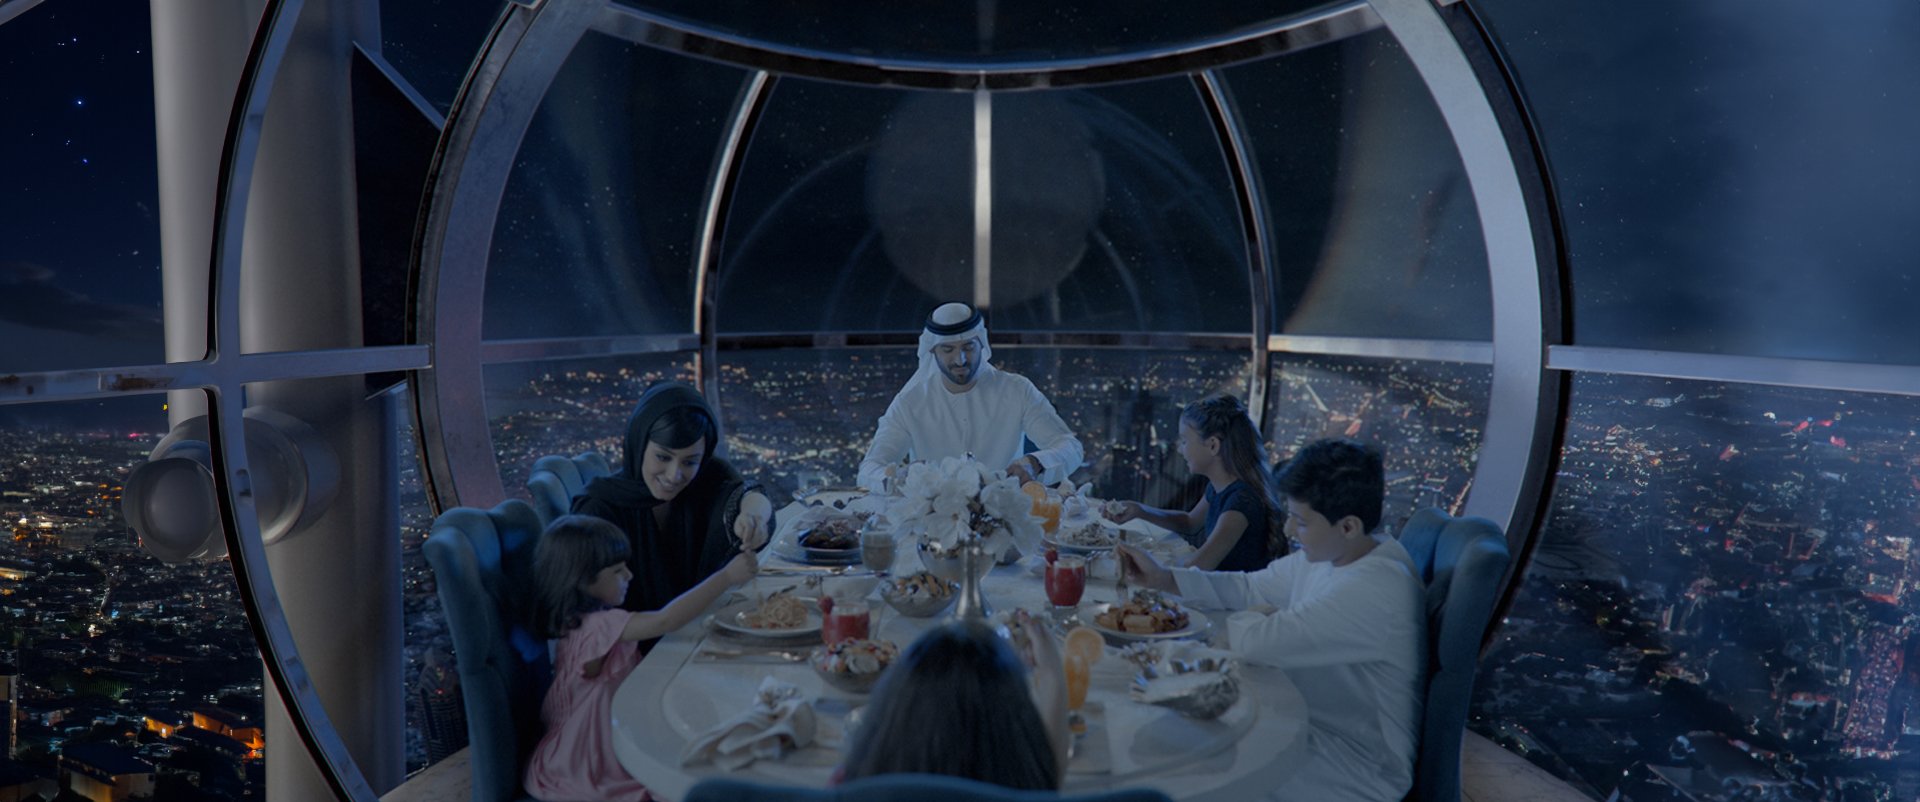 Tomorrow's utopica, Dubai TV Identity 2018 3D enviroment build